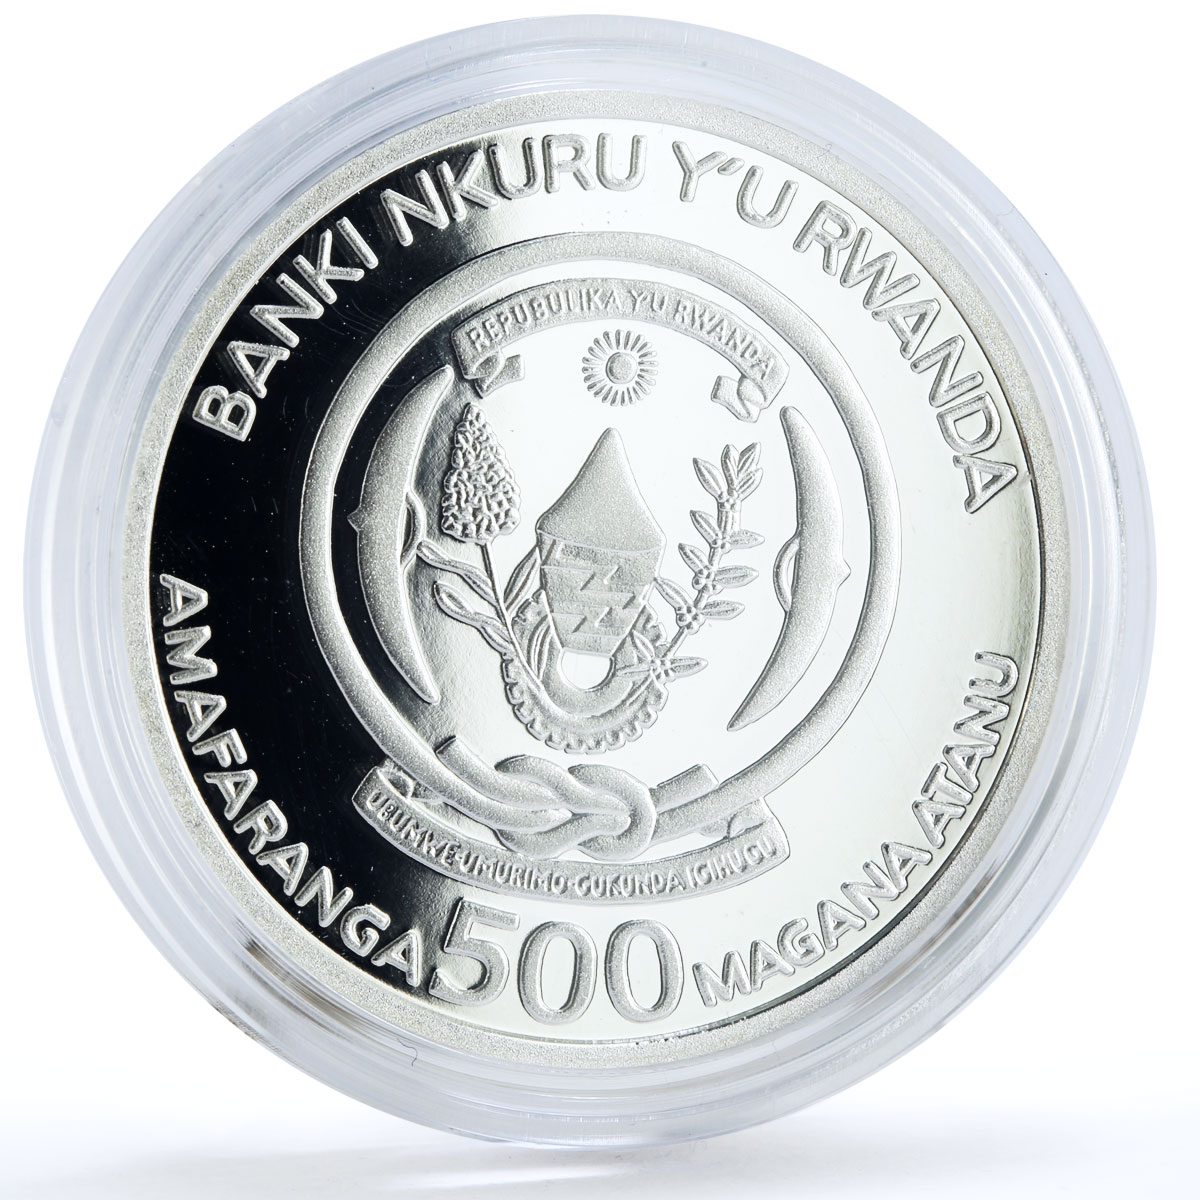 Rwanda 500 francs Trains Railways East African Locomotive proof silver coin 2008